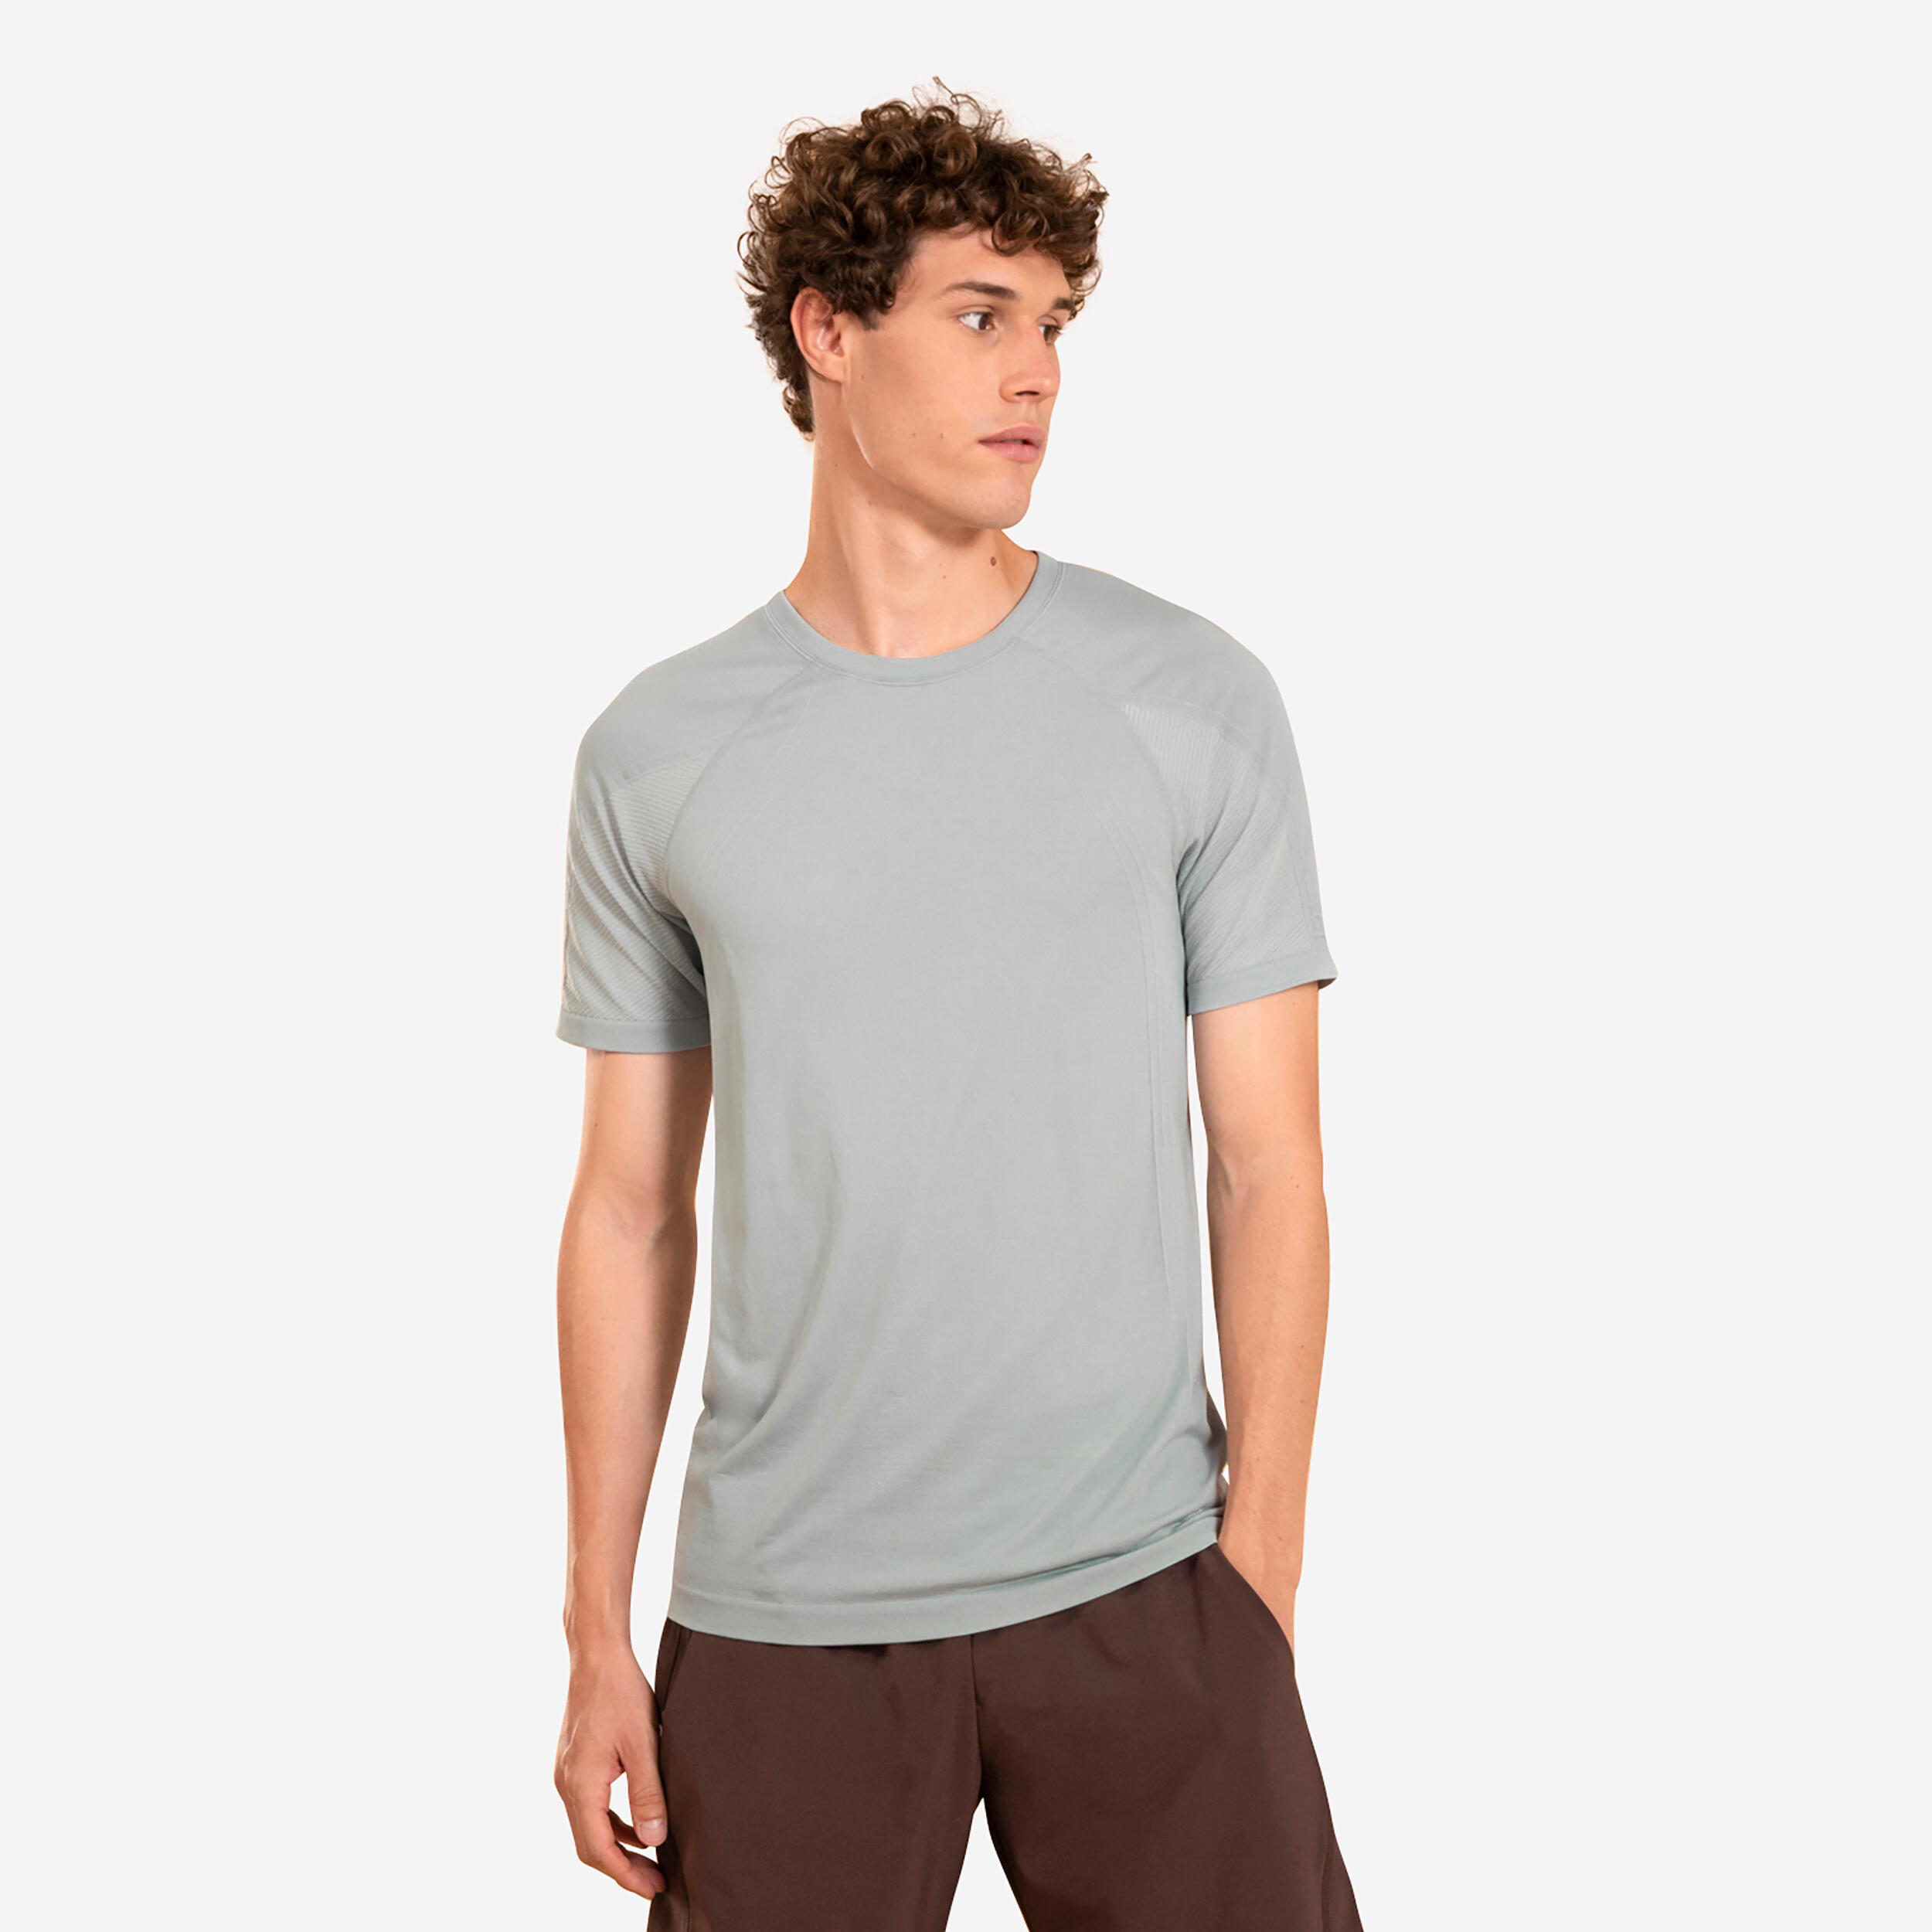 Decathlon | T-shirt uomo yoga slim fit traspirante grigio chiaro |  Kimjaly